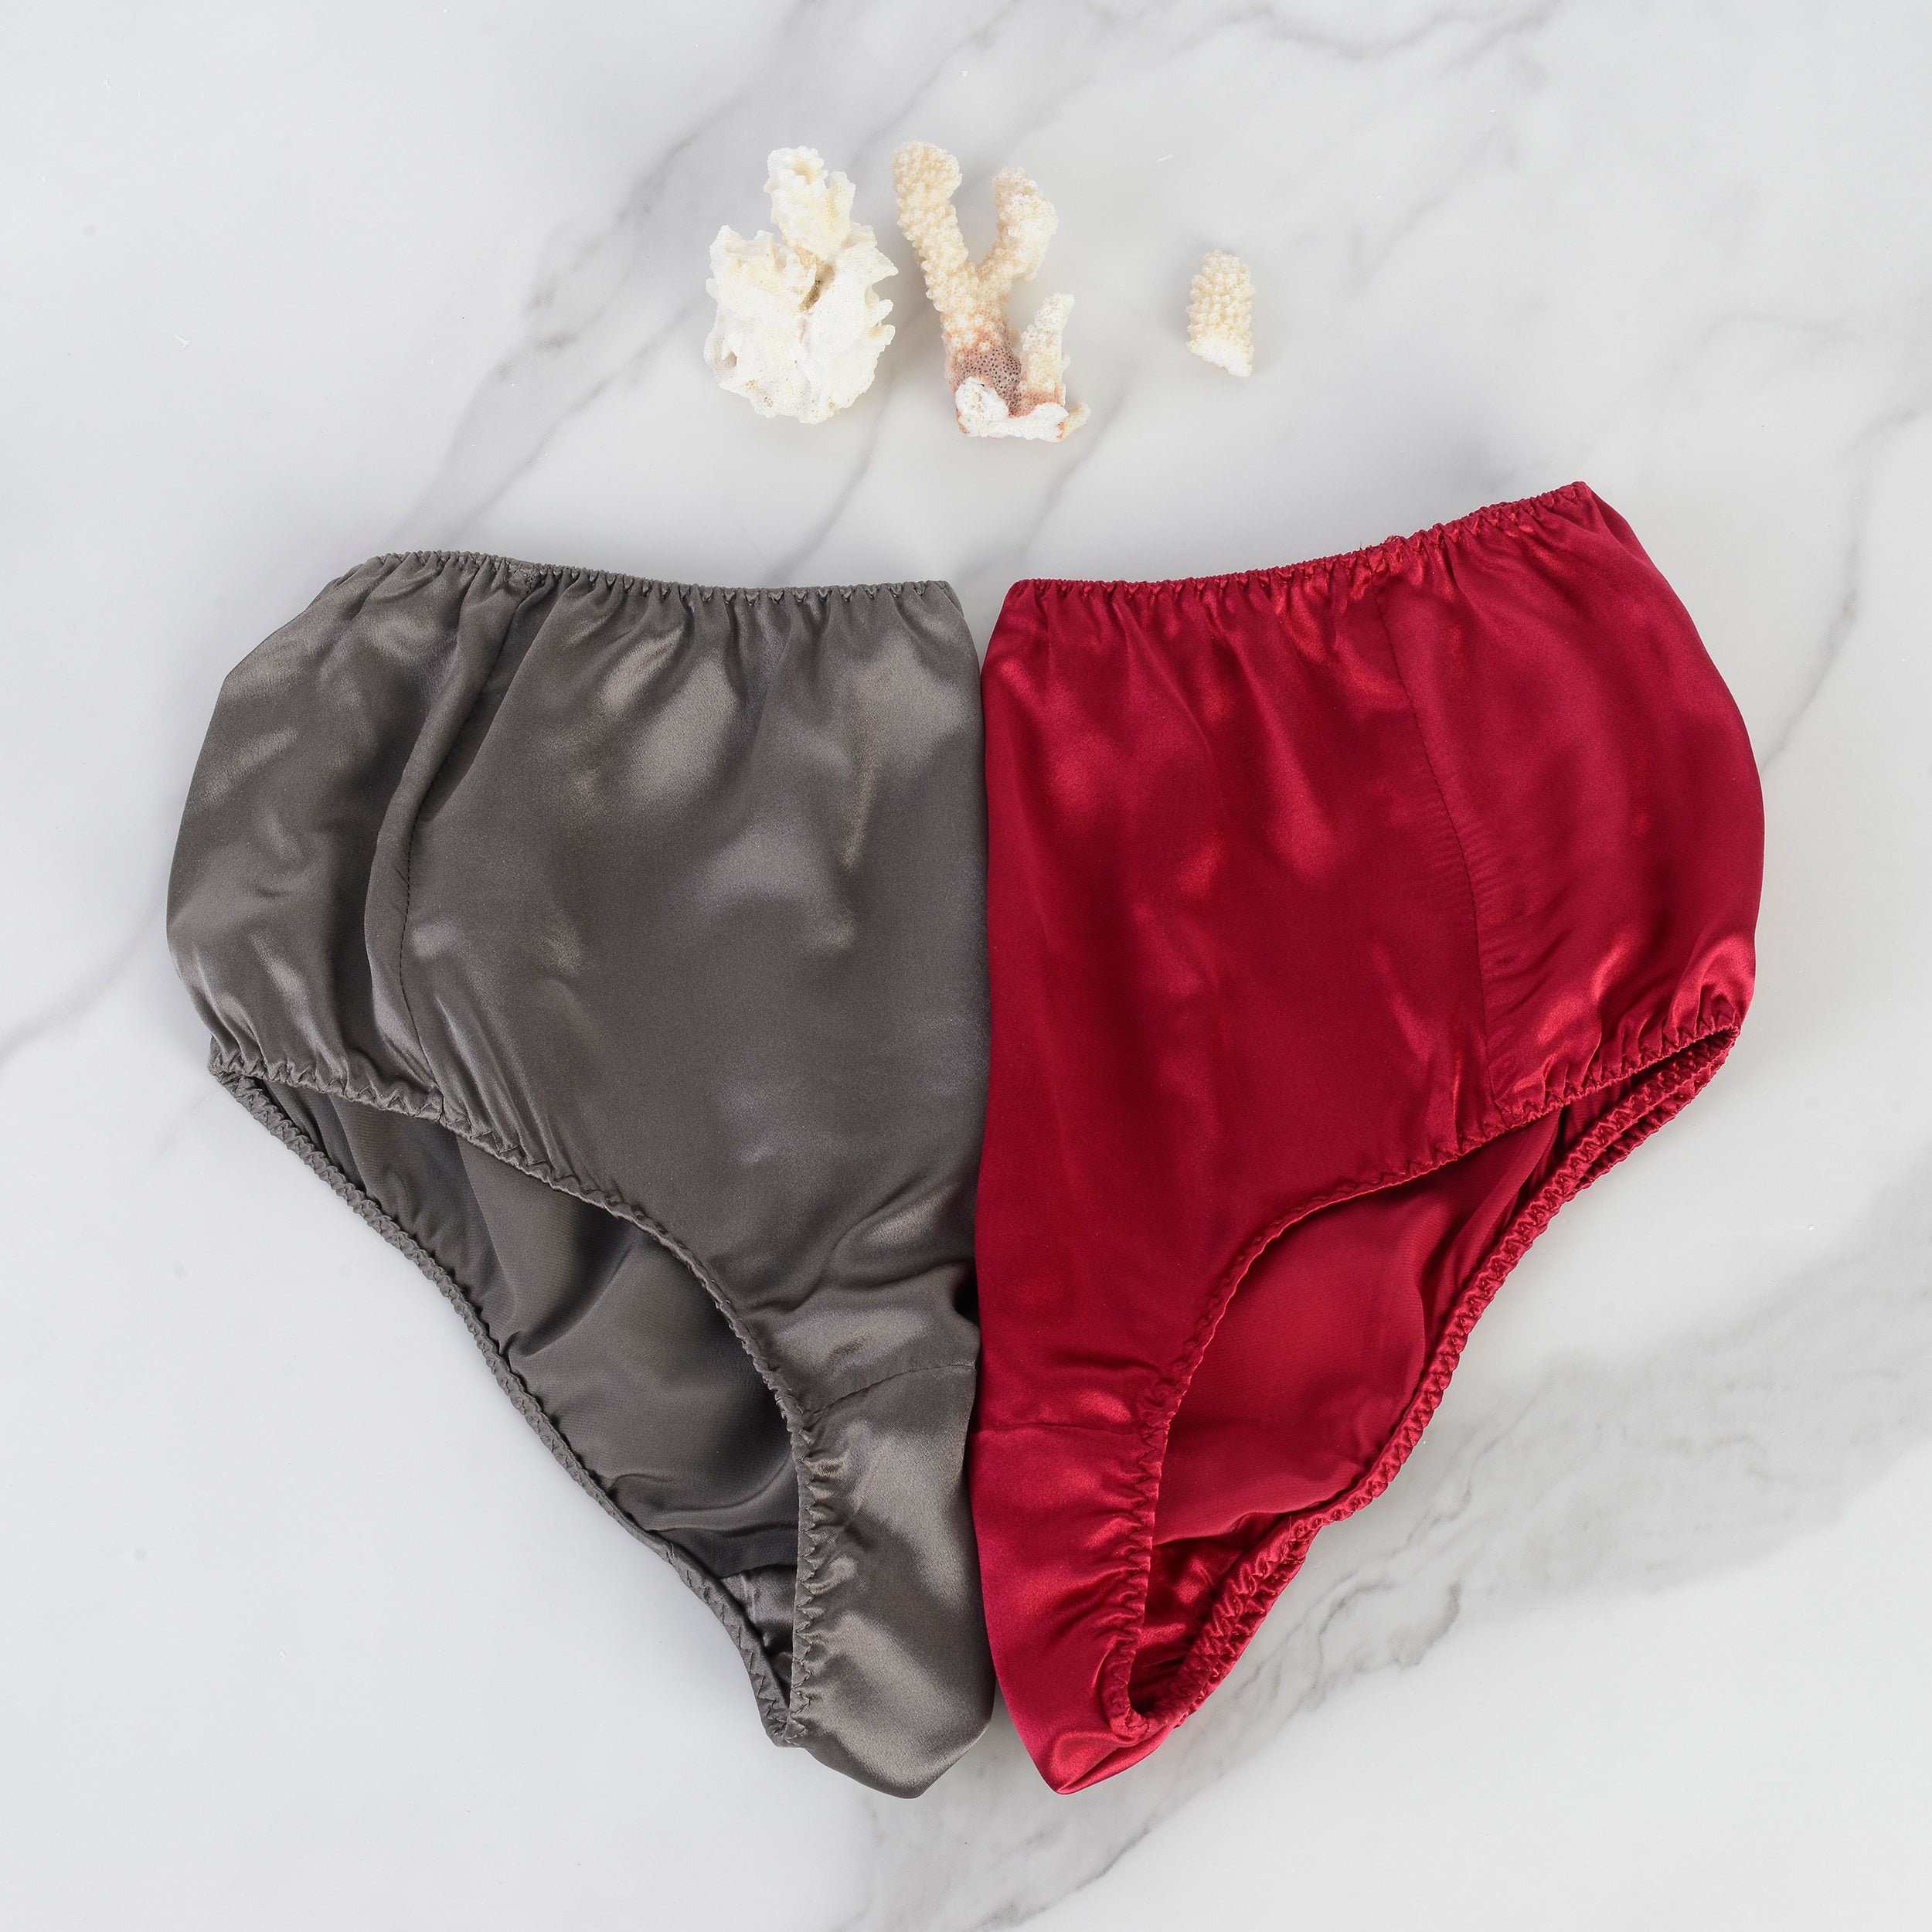 Xiaodriceee See Through Underwear for Women Sheer India